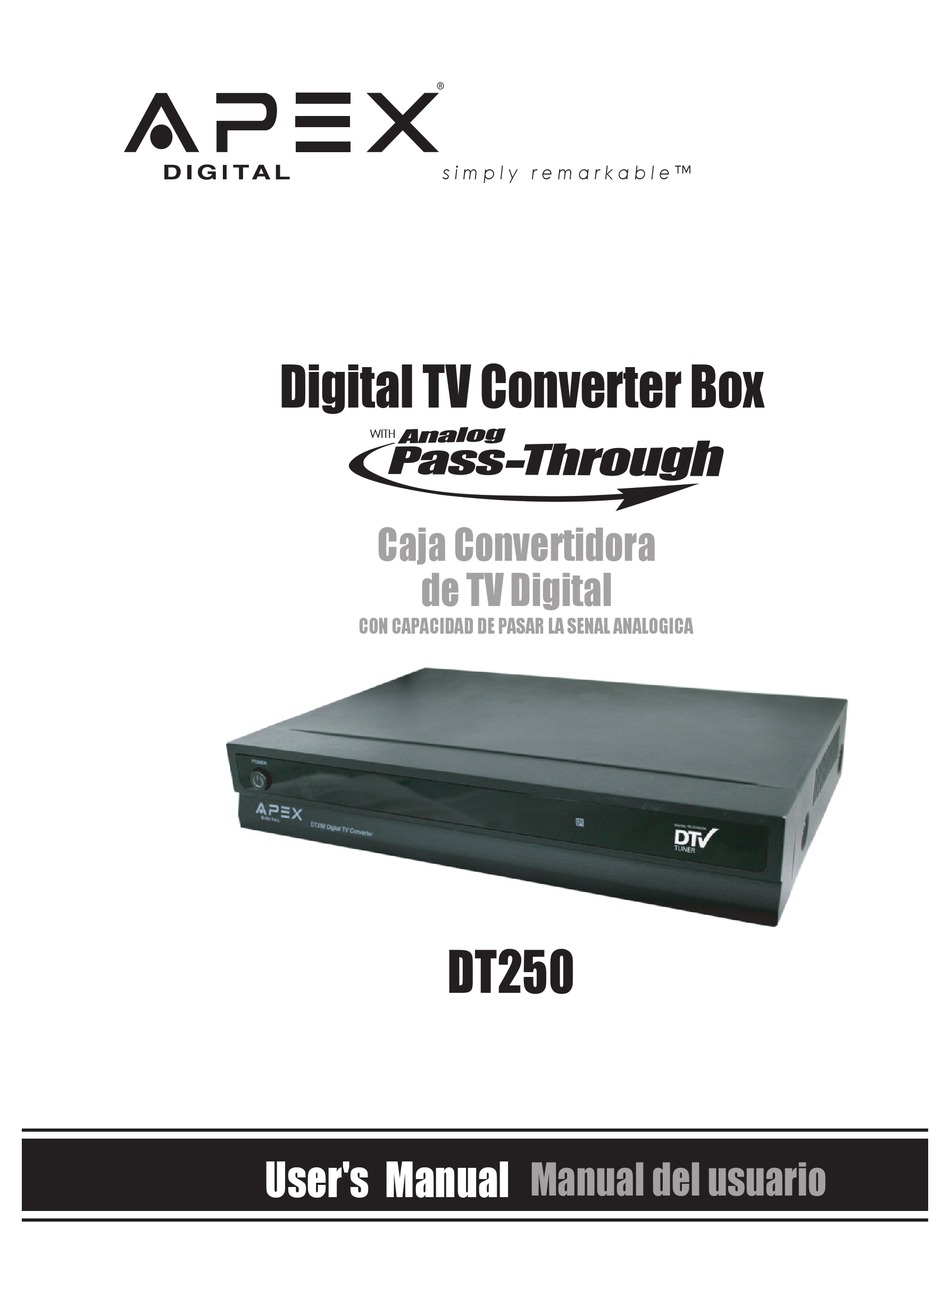 troubleshooting dtv converter box